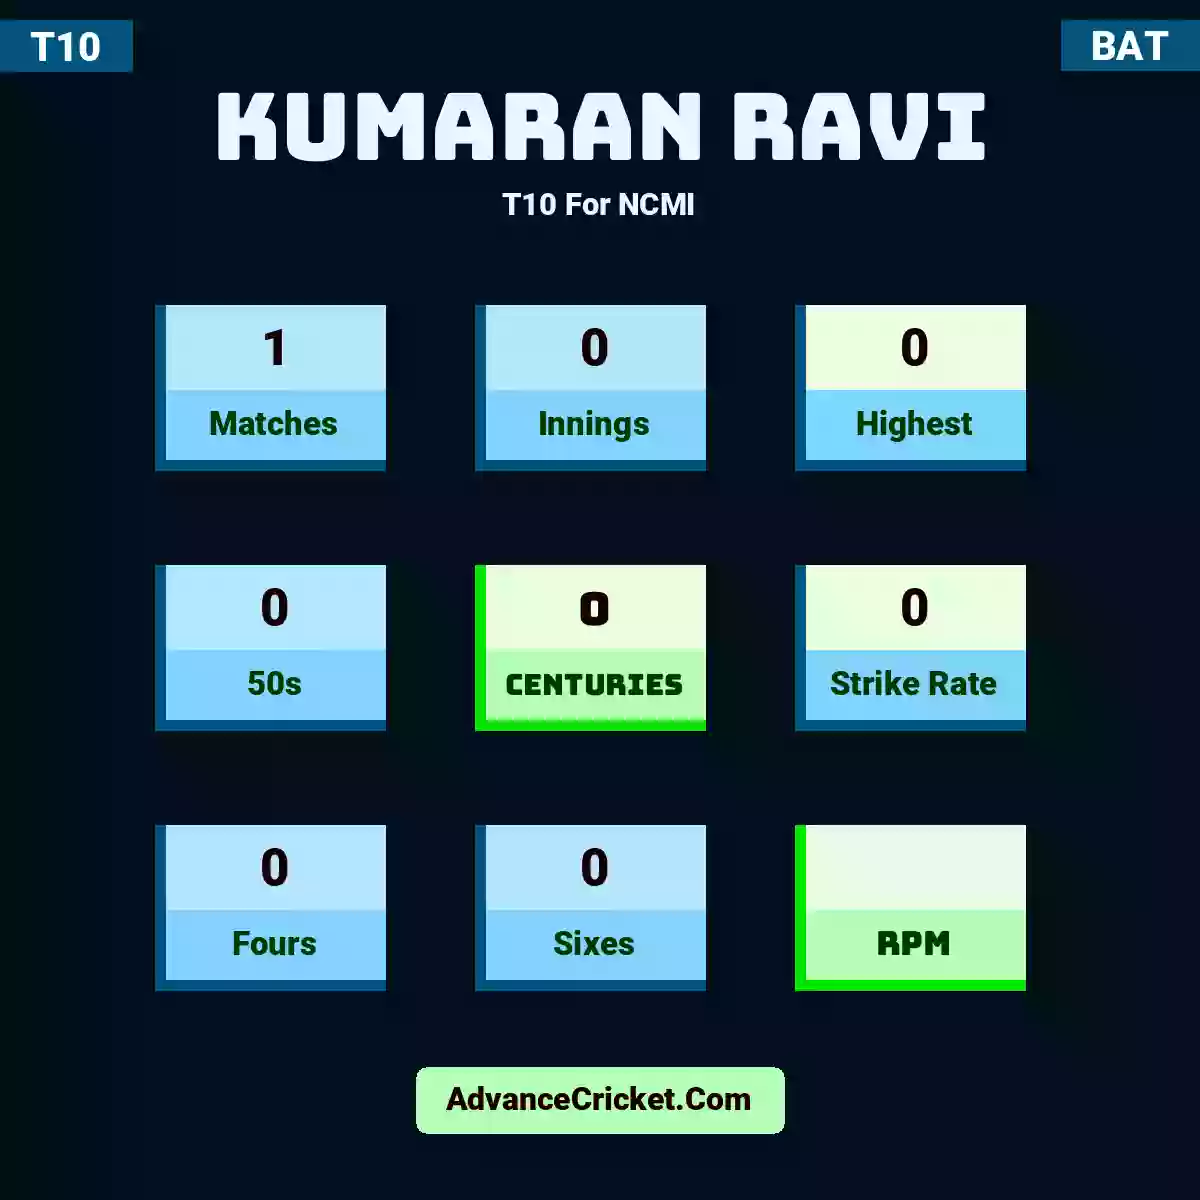 Kumaran Ravi T10  For NCMI, Kumaran Ravi played 1 matches, scored 0 runs as highest, 0 half-centuries, and 0 centuries, with a strike rate of 0. K.Ravi hit 0 fours and 0 sixes.